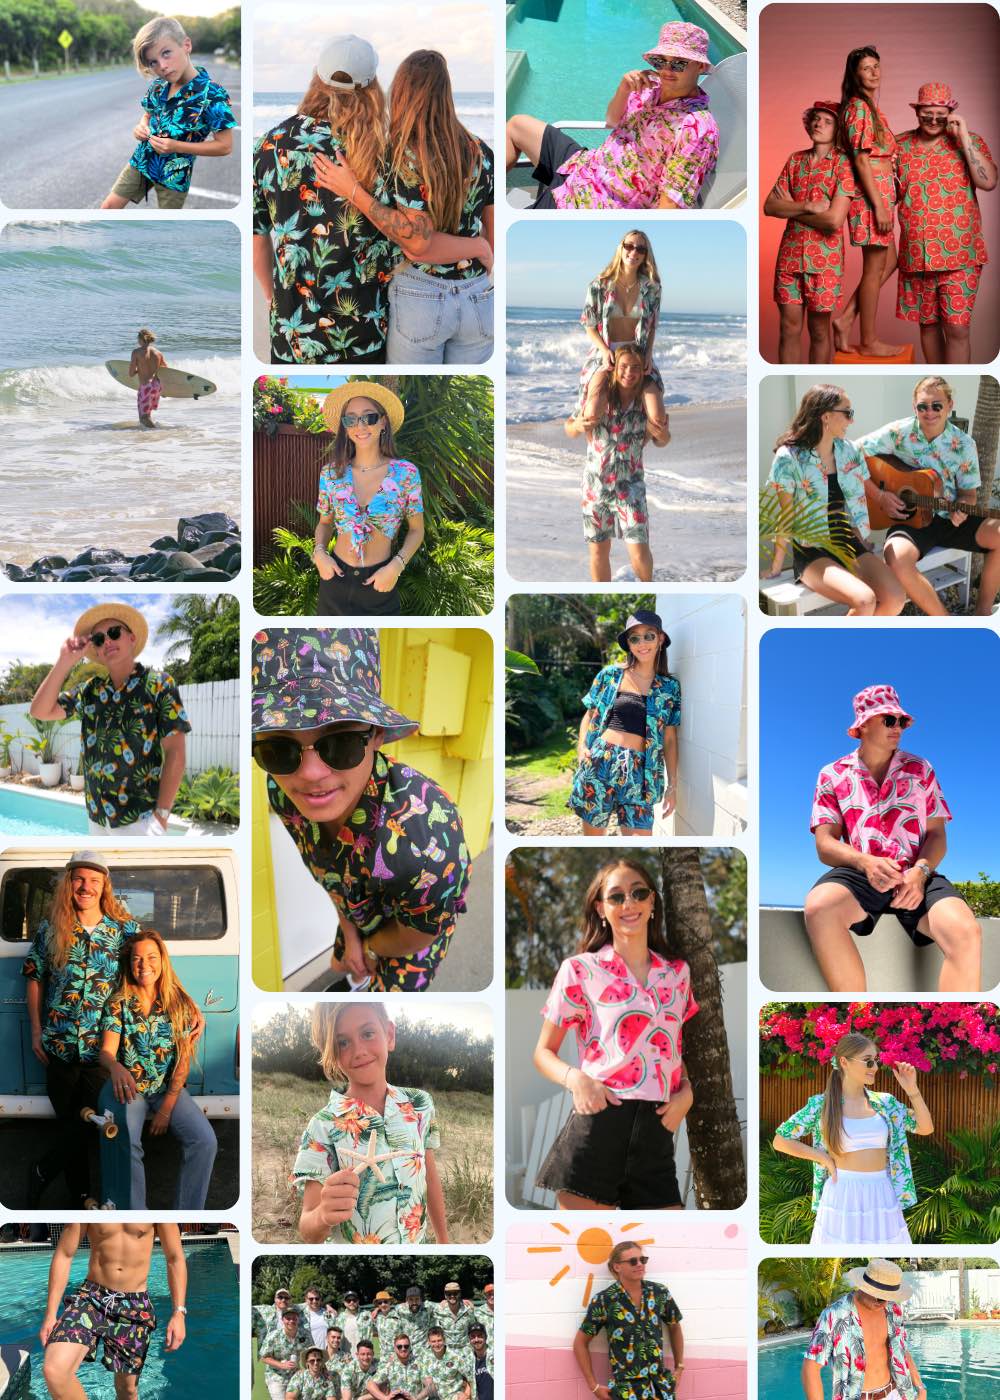 collaborations hawaiian shirts australia party festival apparel island style clothing